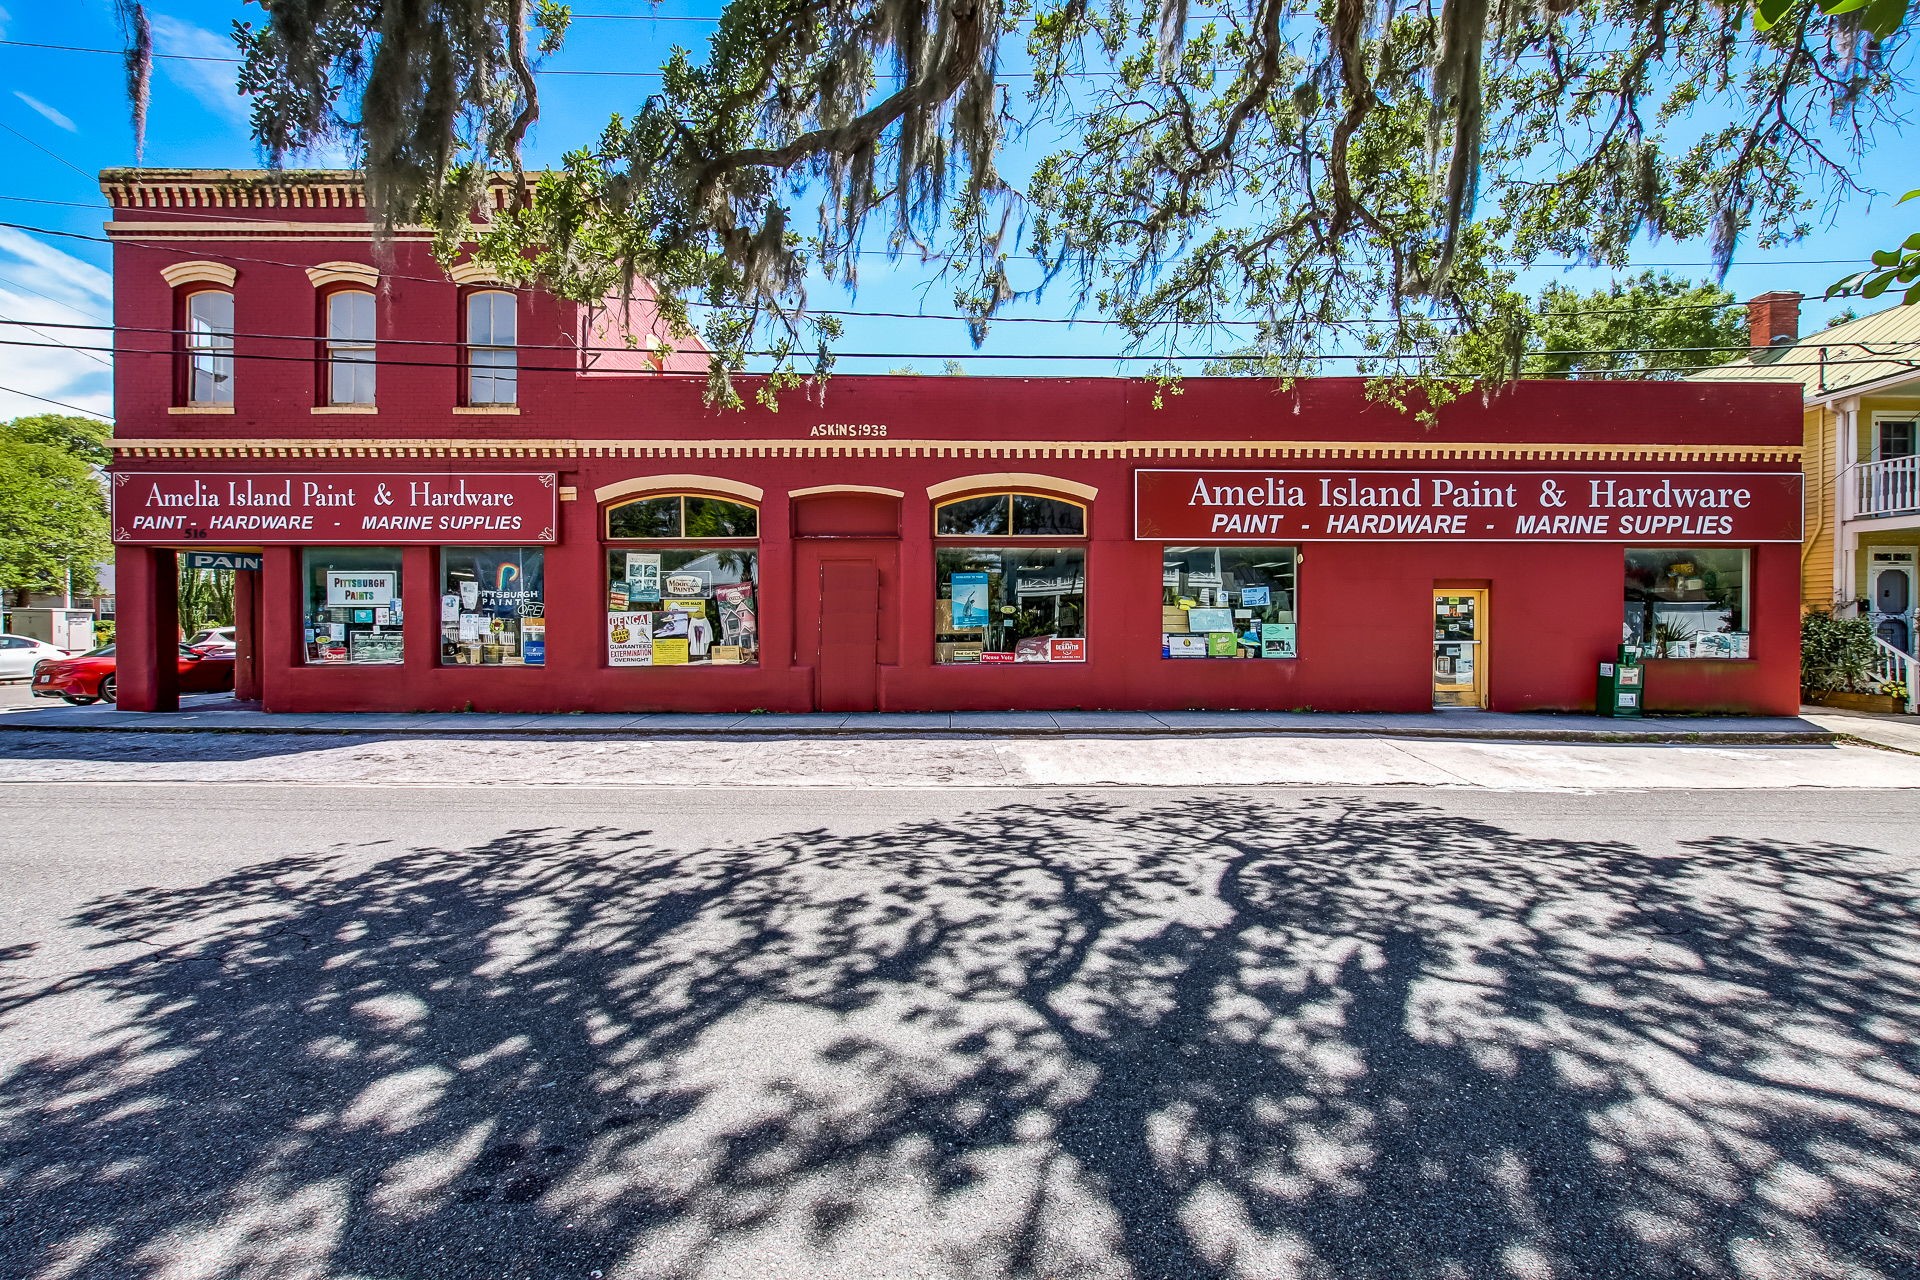 Fernandina Beach Historic District Commercial Building, Includes